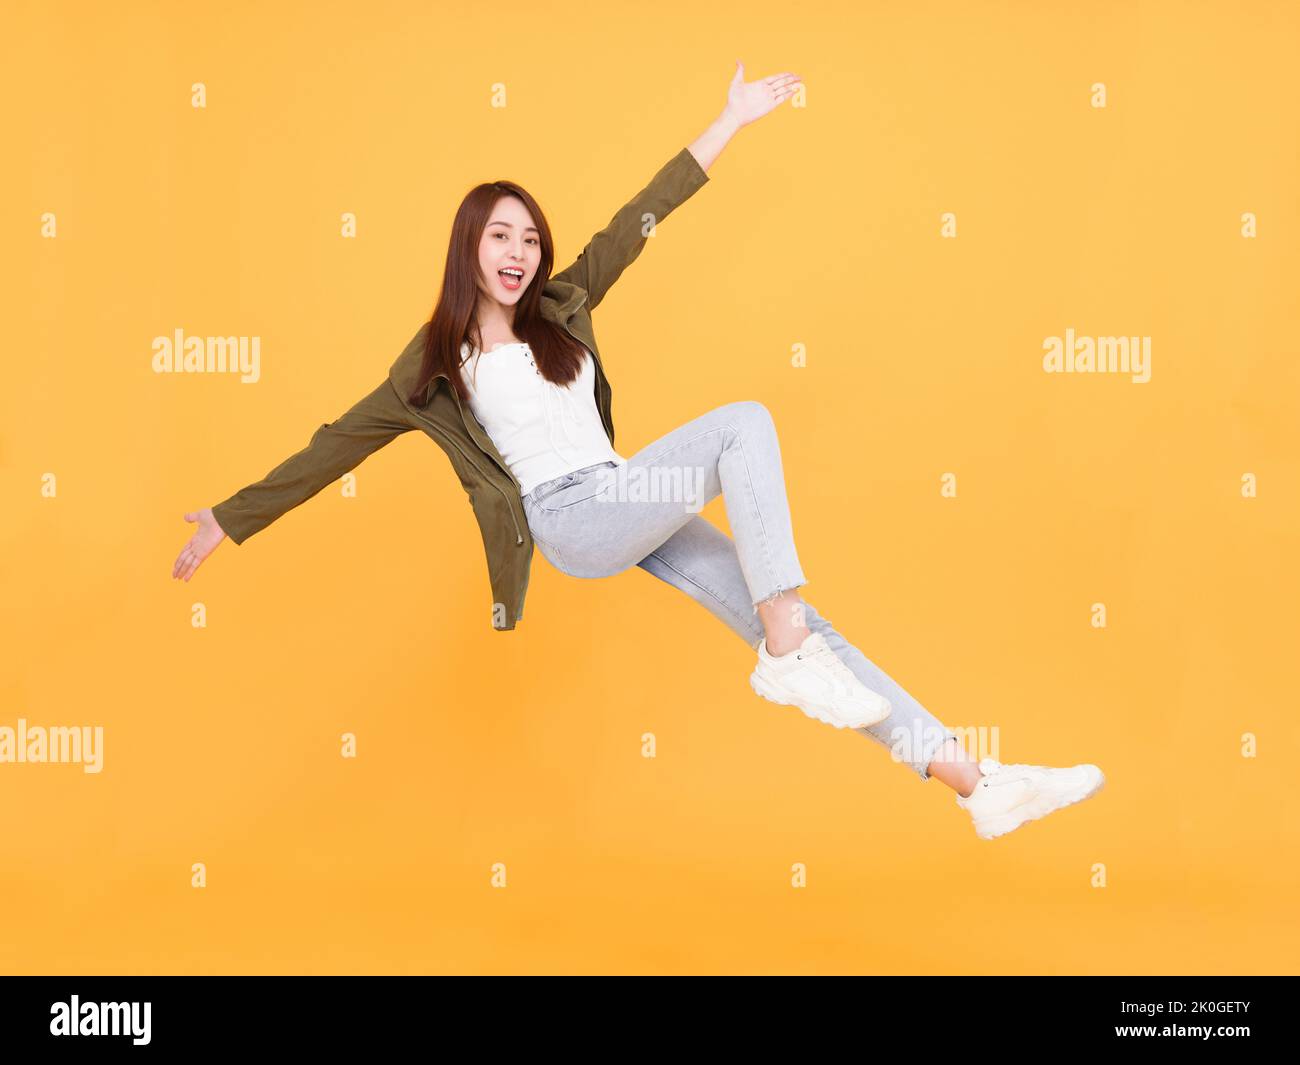 Felice giovane donna saltando e ballando isolato su sfondo giallo Foto Stock